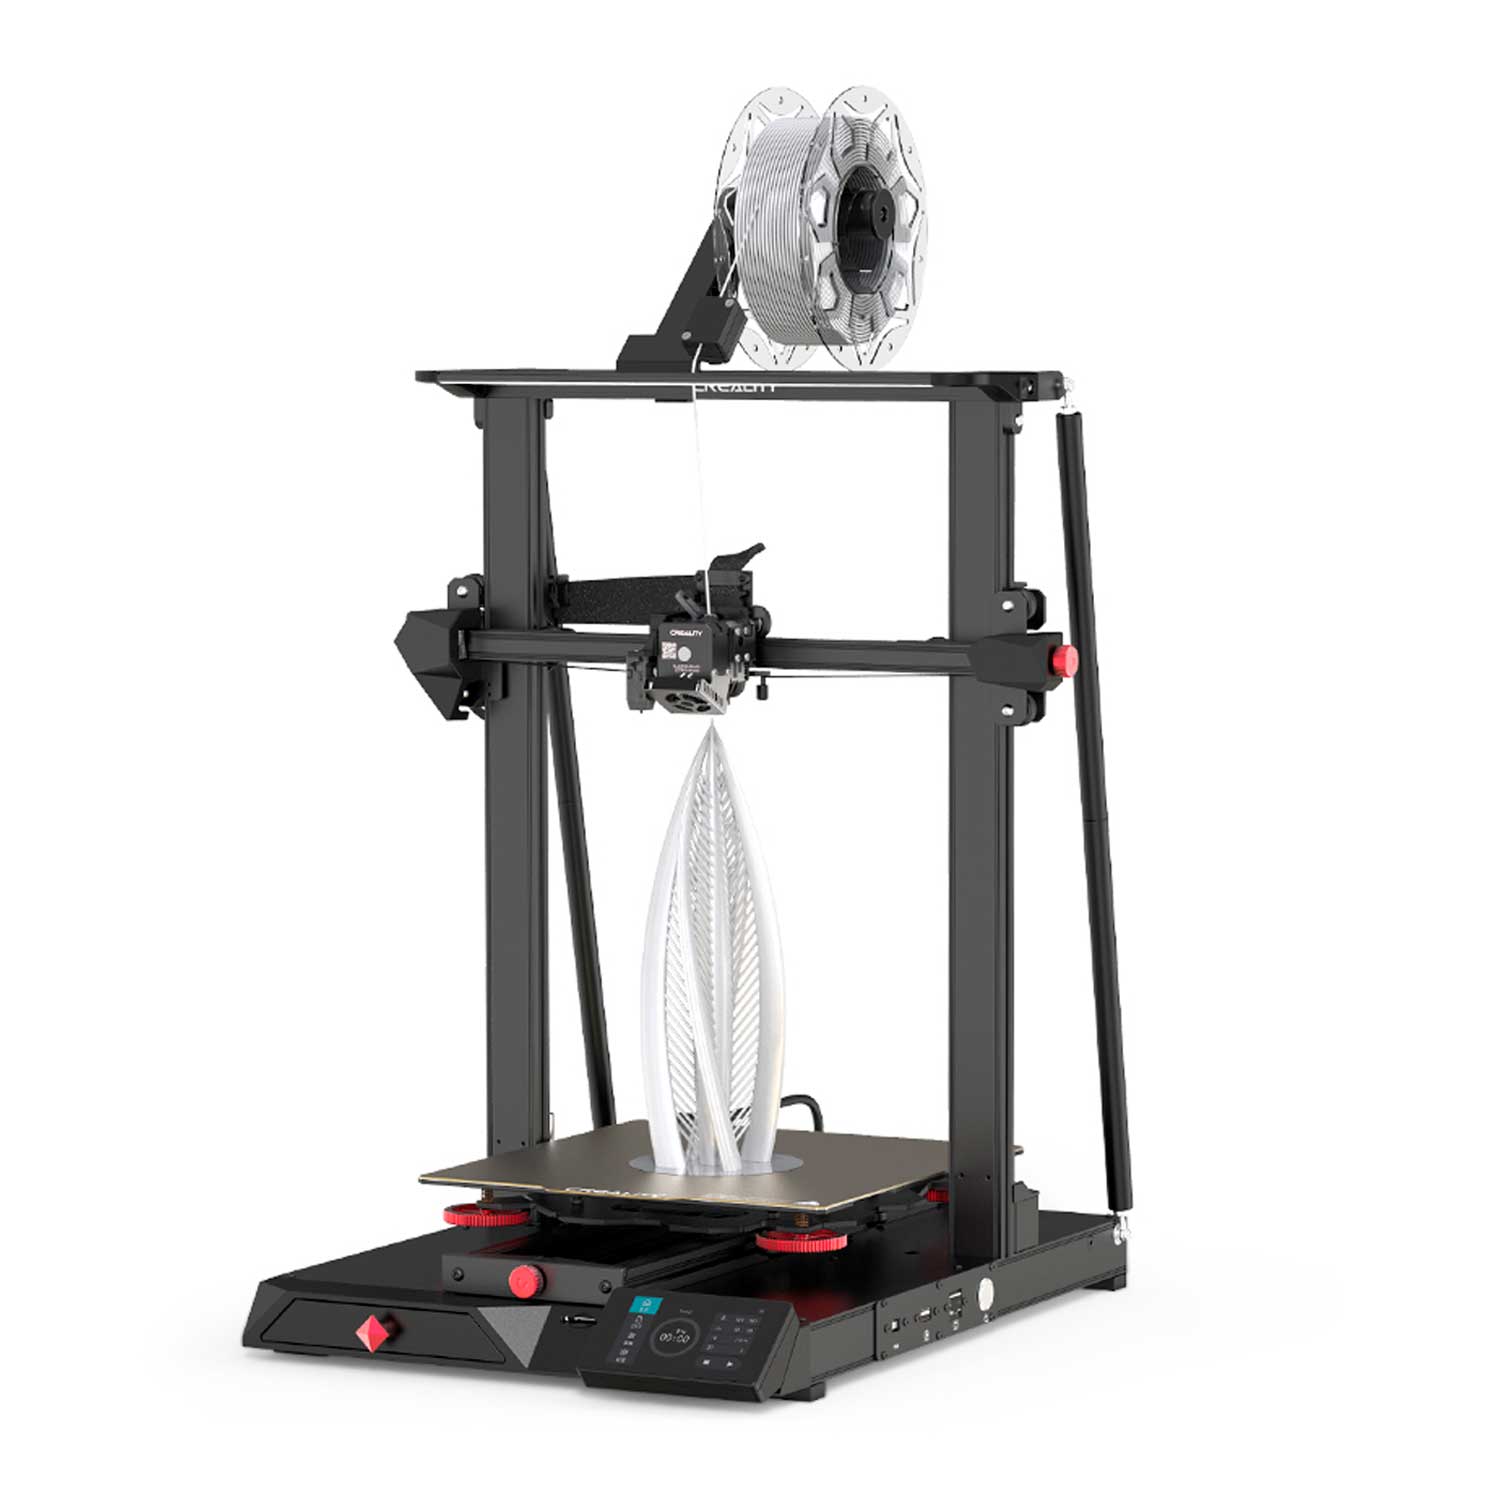 Impressora 3D Creality CR-10 Smart Pro (300*300*400MM)